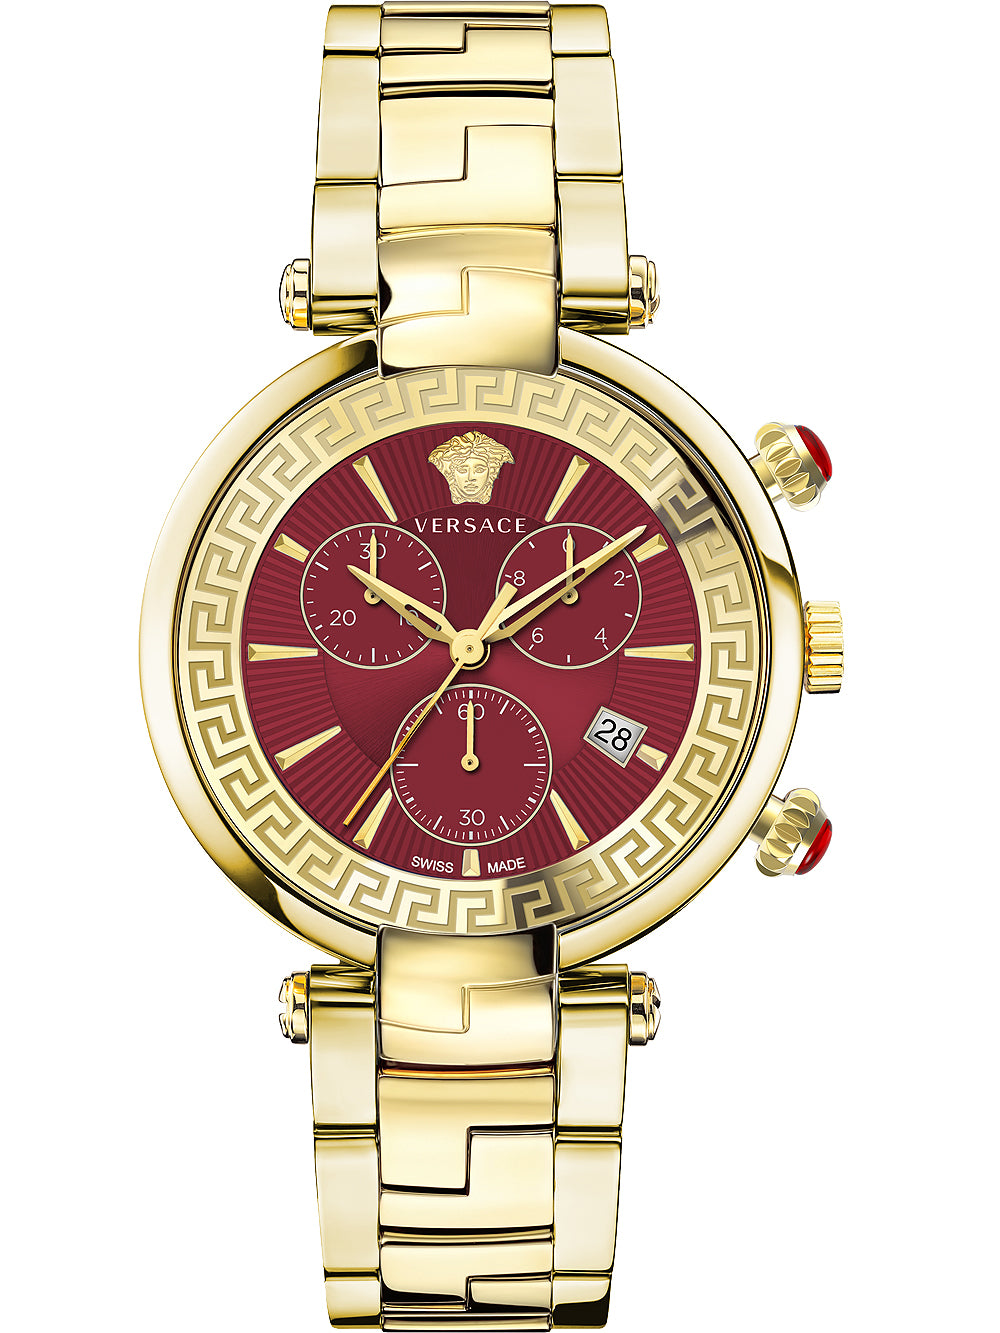 Versace Men's Watch Revive Chrono 41mm Red Gold Bracelet VE2M00721